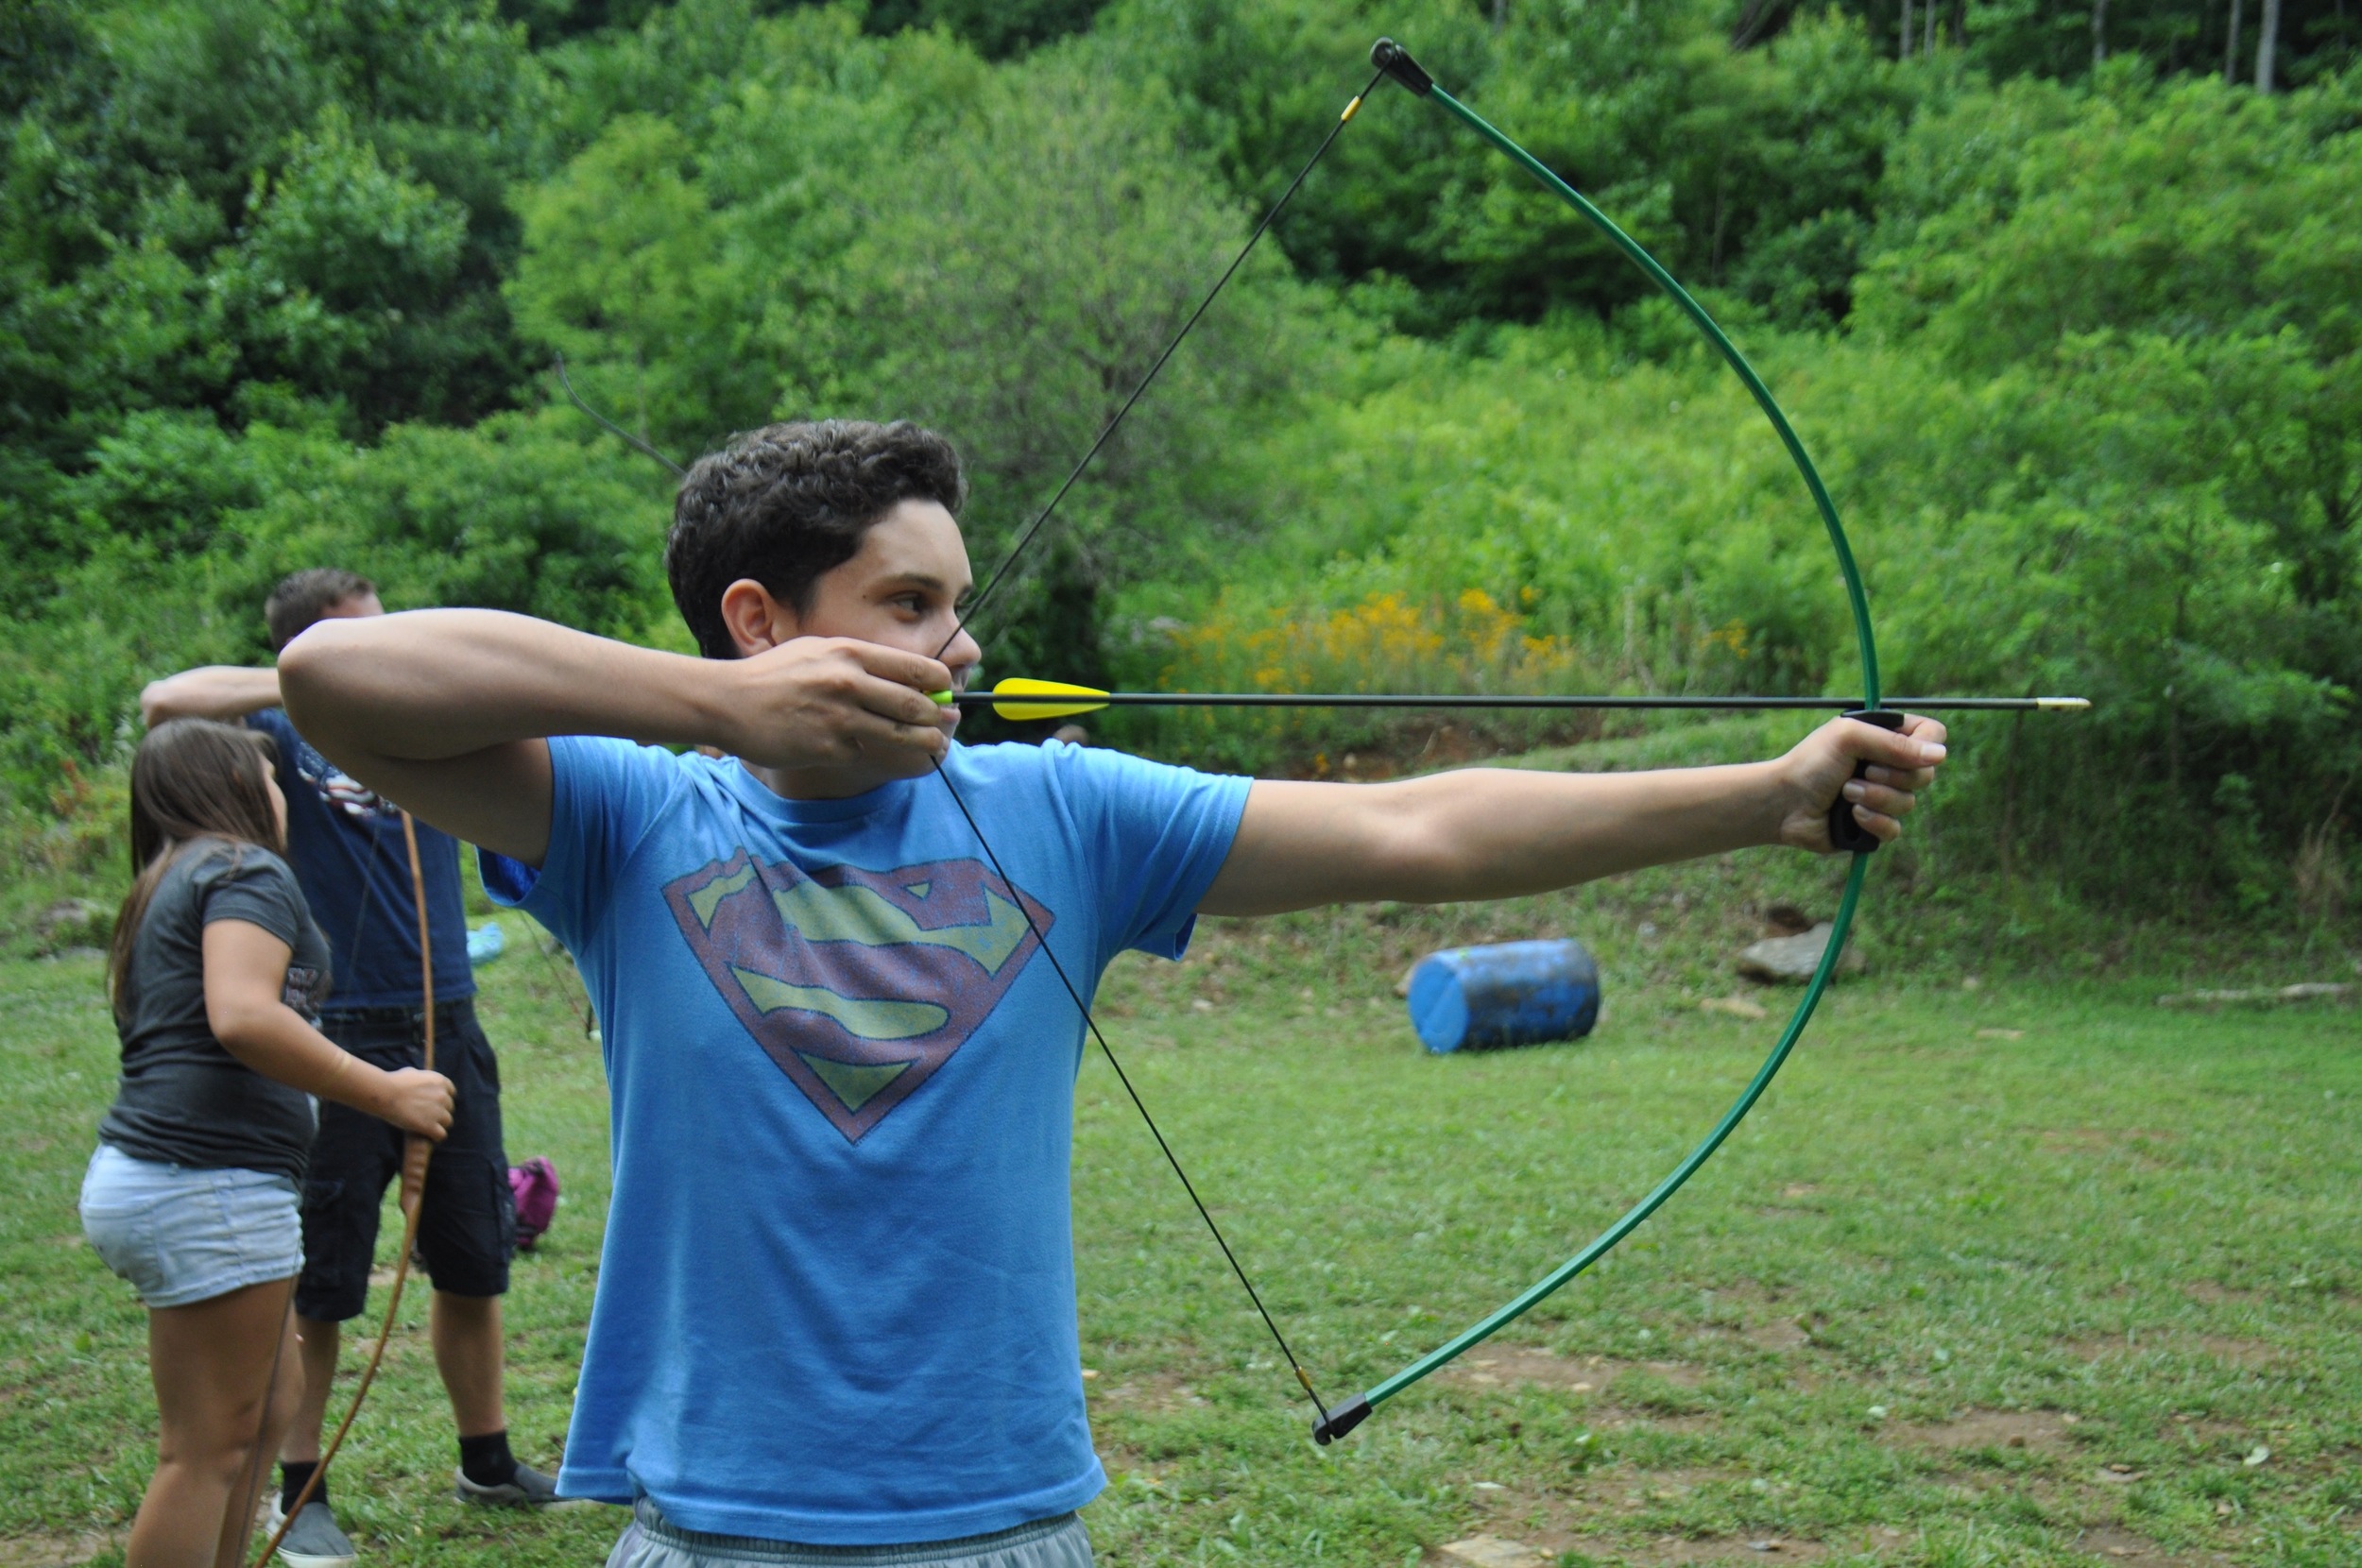 ethan-draws-back-his-bow-and-aims-for-the-bullseye.jpg